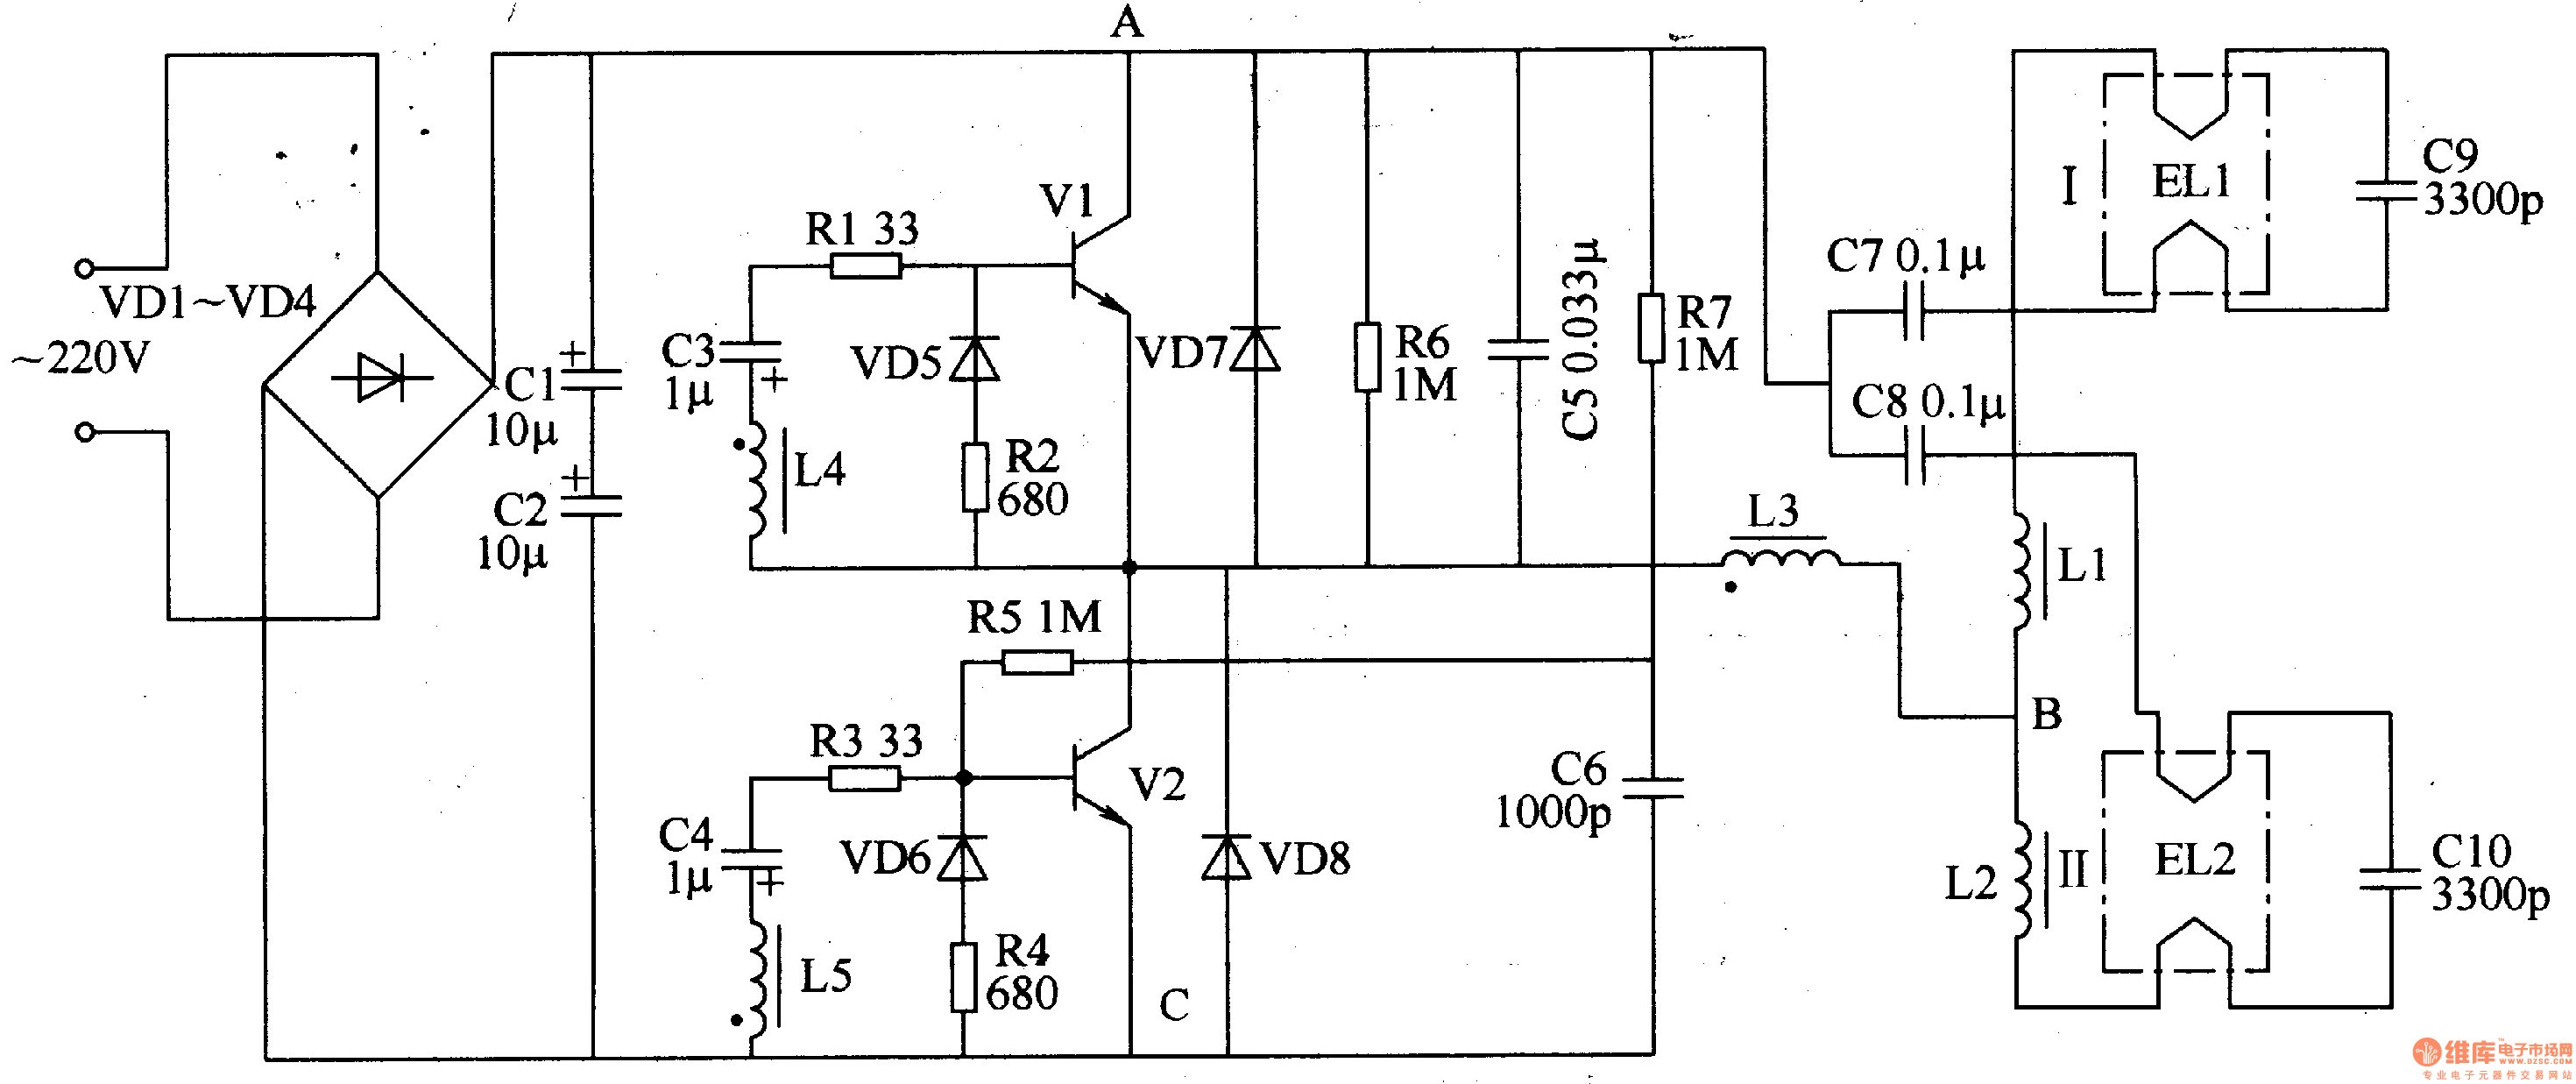 Electronic Ballast Circuit Diagram Zen electrical switches transistor amplifier circuit diagram simple burglar